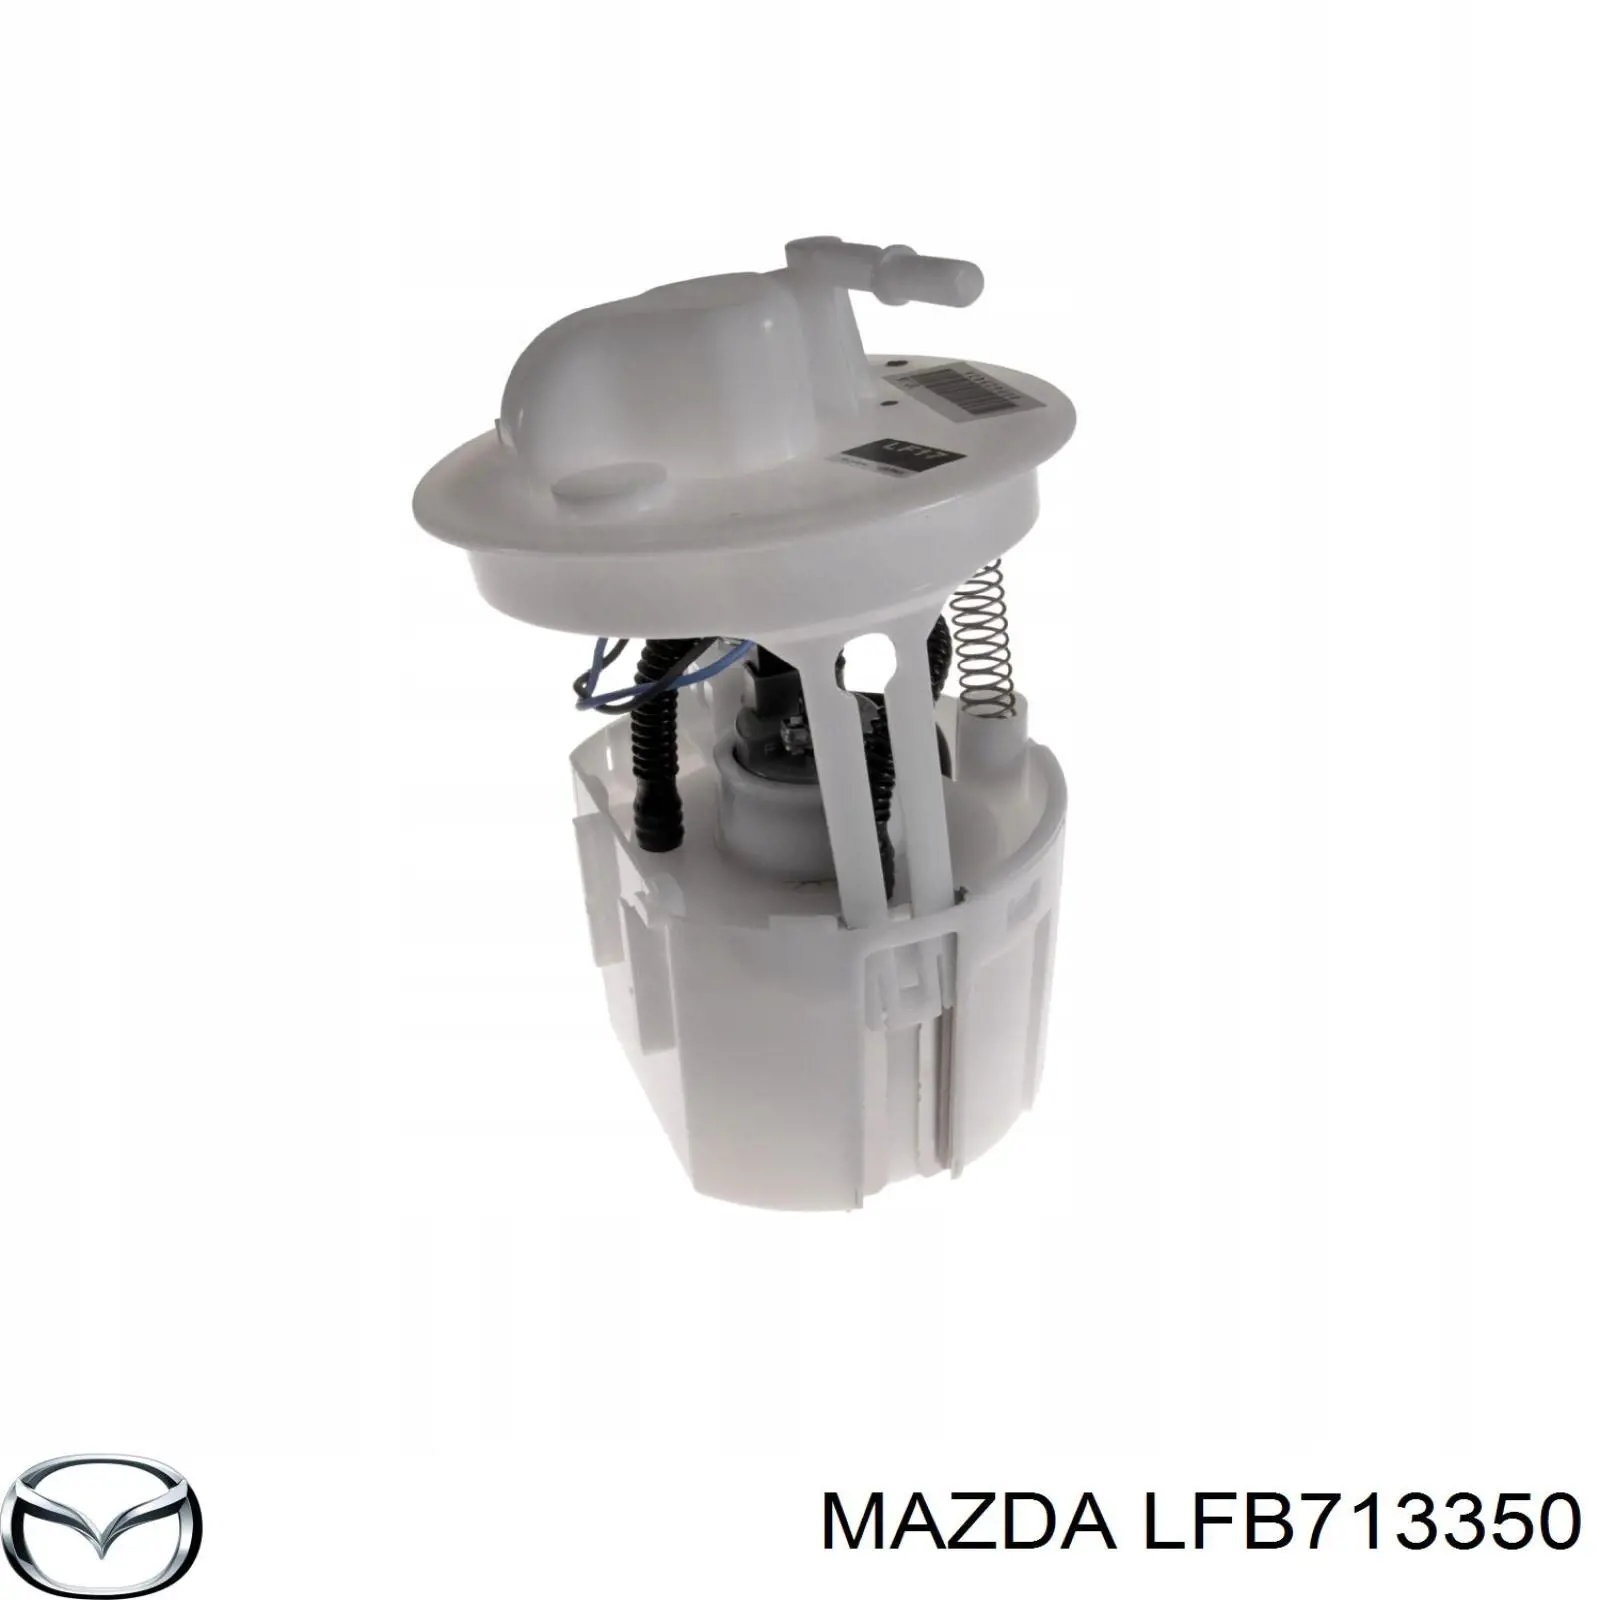 LFB713350 Mazda